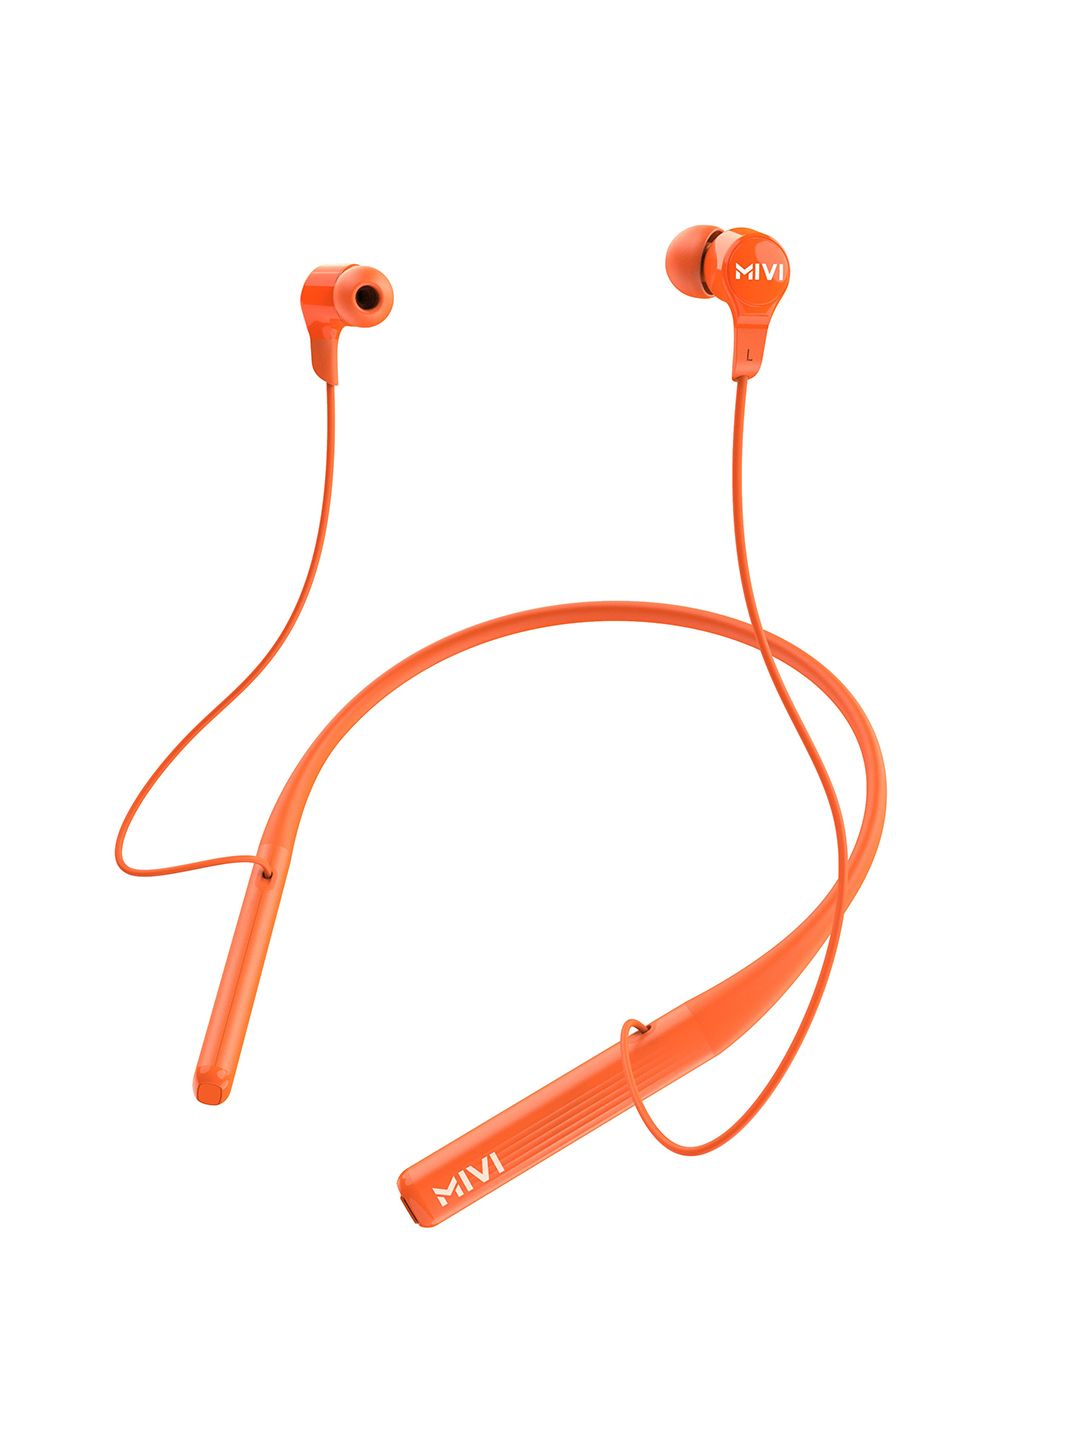 mivi Collar 2B Wireless Earphones with Fast Charging - Orange Price in India